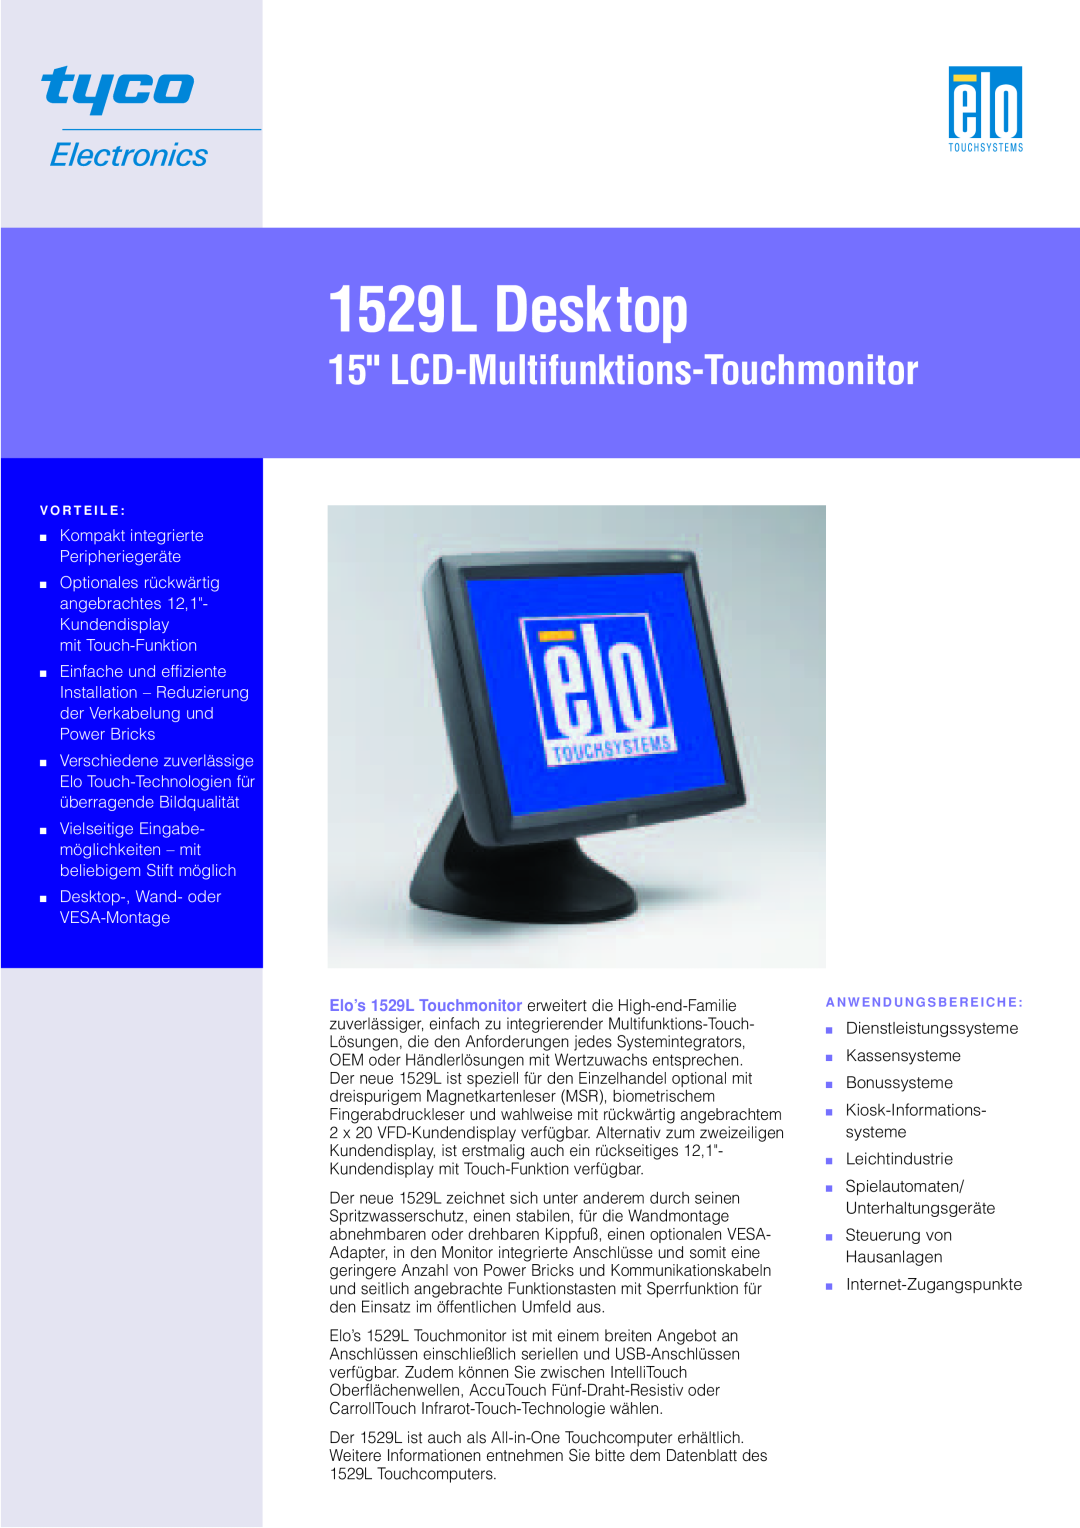 Elo TouchSystems manual 1529L Desktop, LCD-Multifunktions-Touchmonitor, Kompakt integrierte Peripheriegeräte 